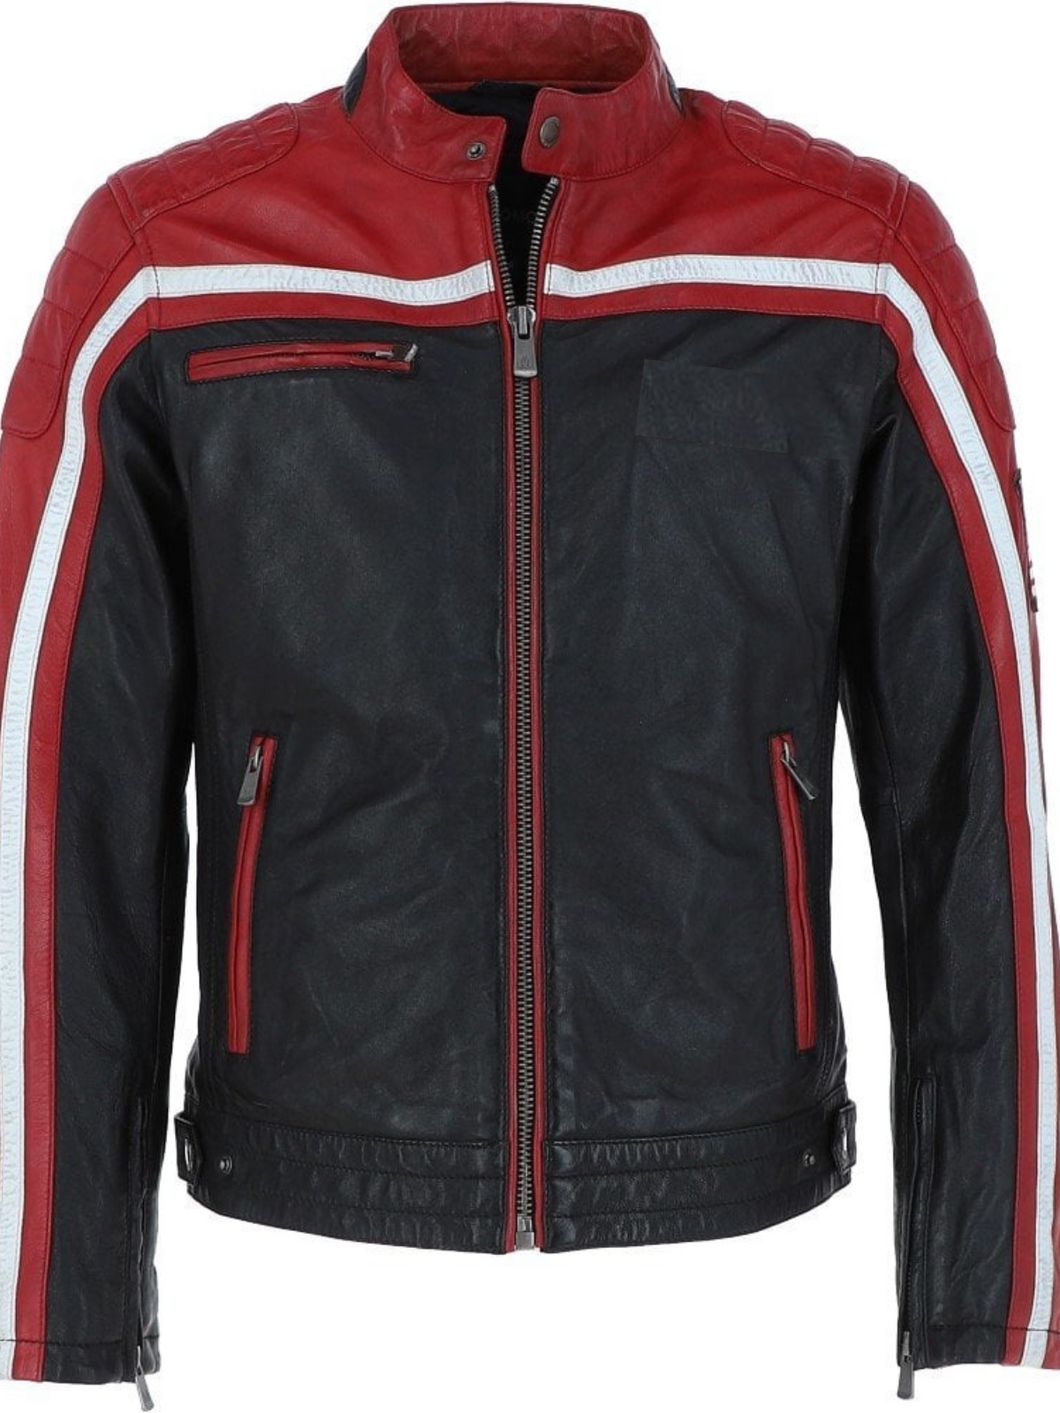 Men's Black and Red Real Leather Biker Jacket